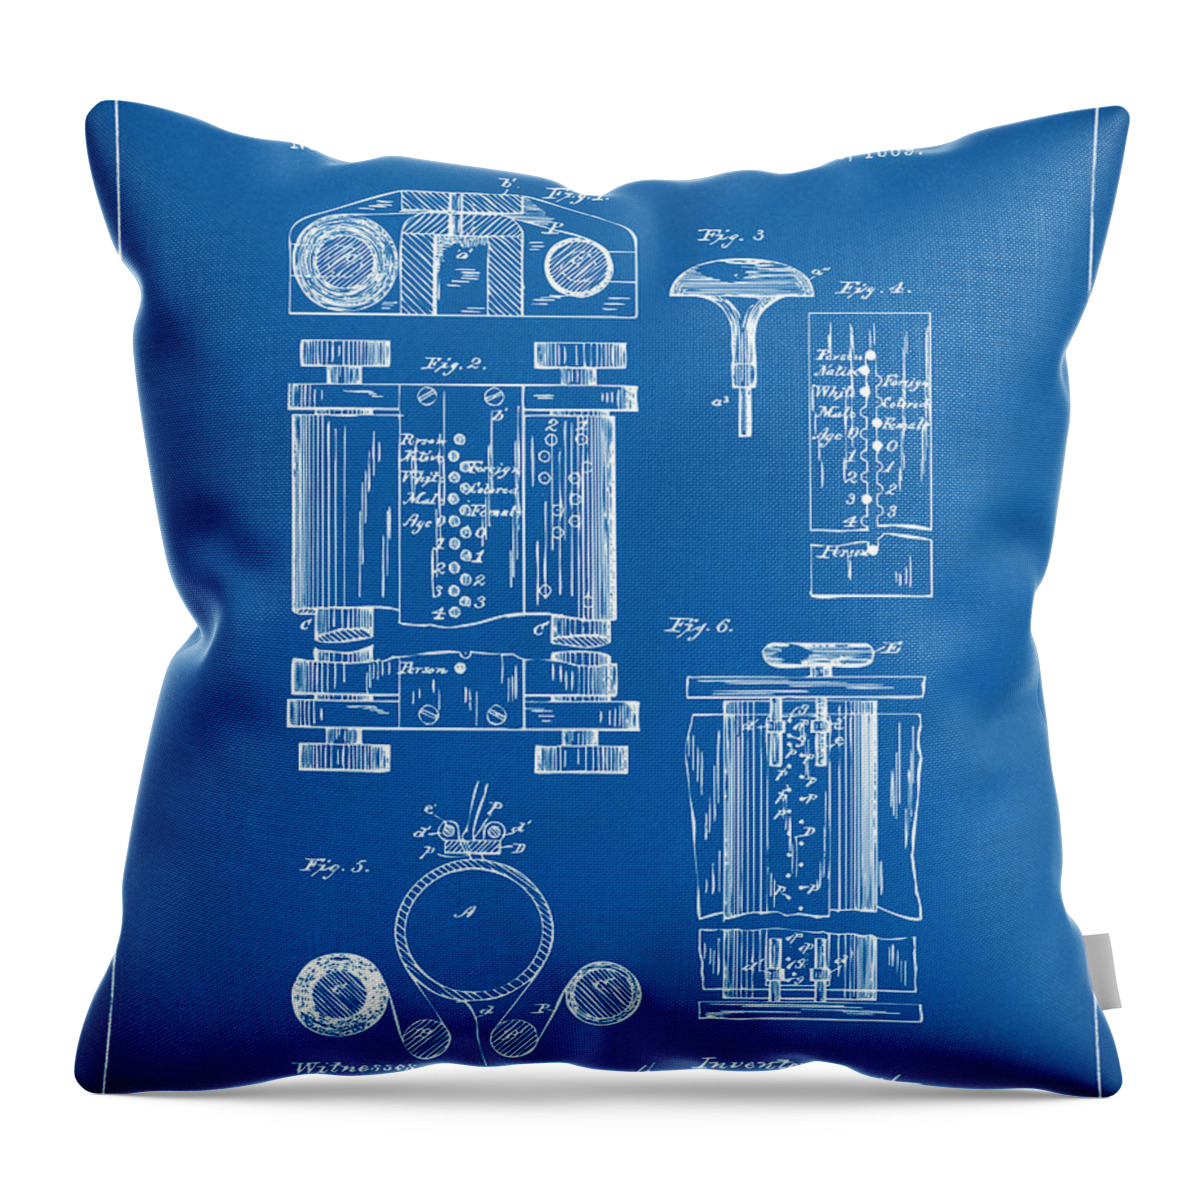 First Computer Throw Pillow featuring the digital art 1889 First Computer Patent Blueprint by Nikki Marie Smith